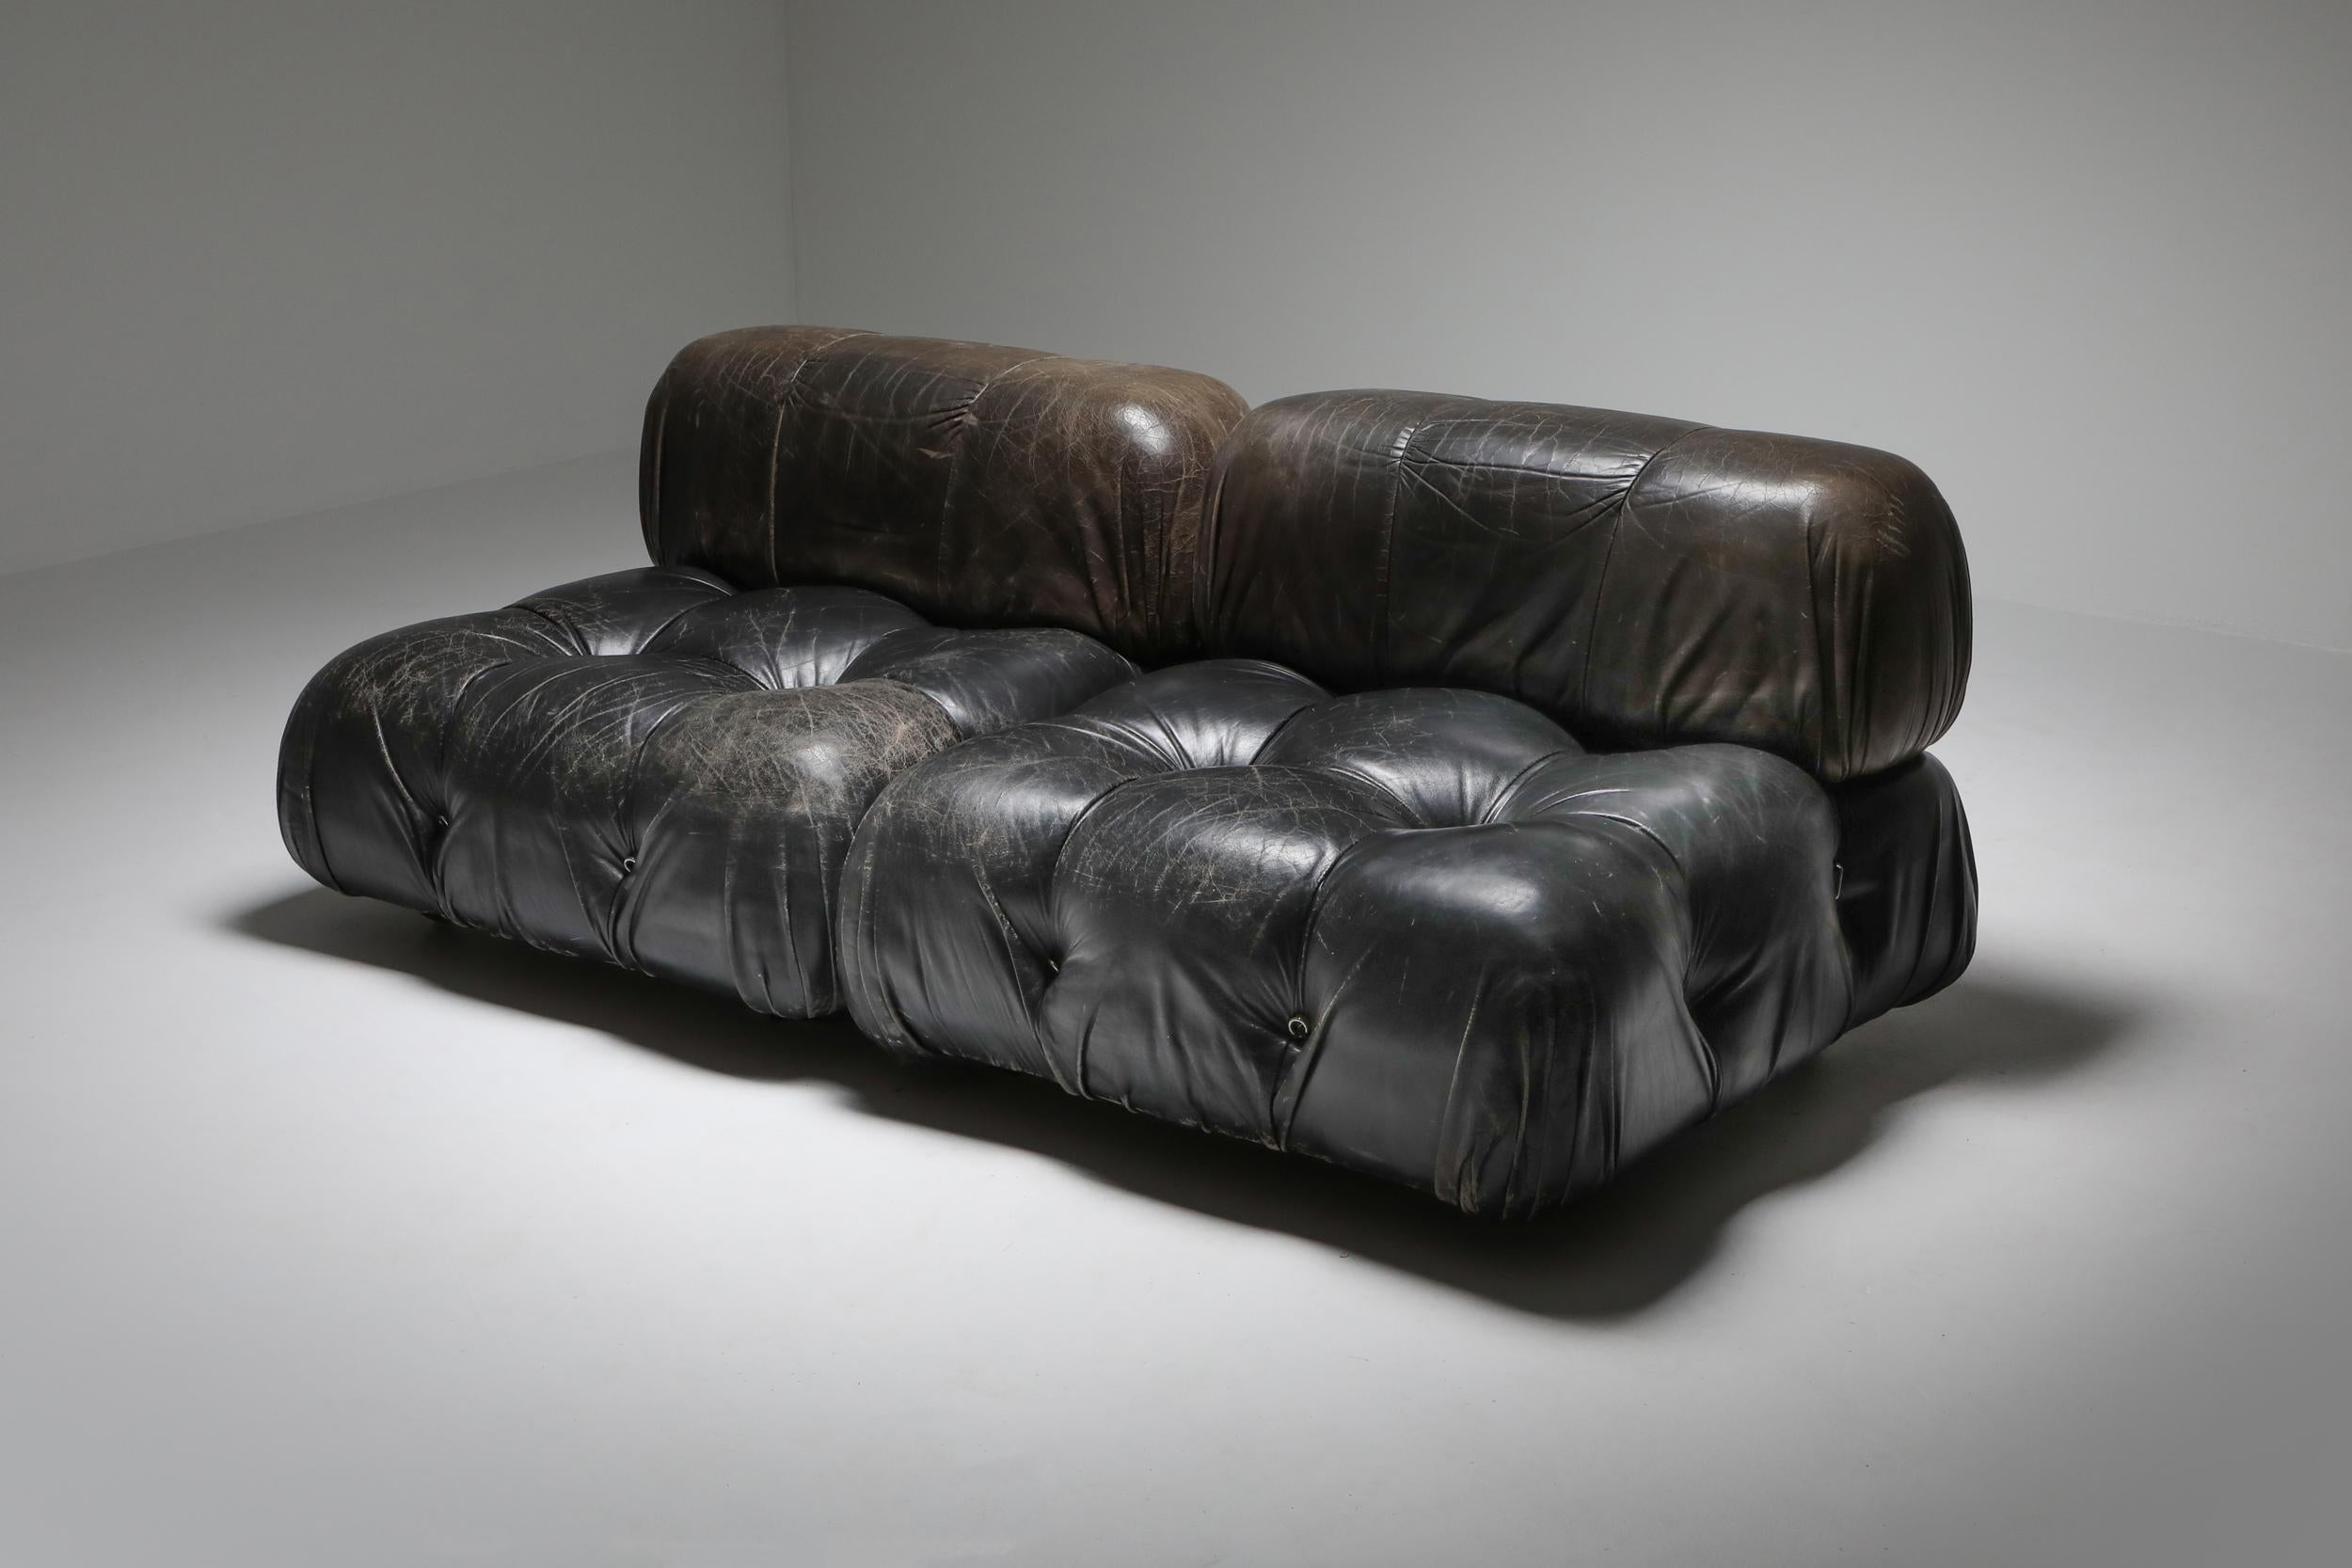 20th Century Mario Bellini's 'Camaleonda' Lounge Chairs in Original Black Leather